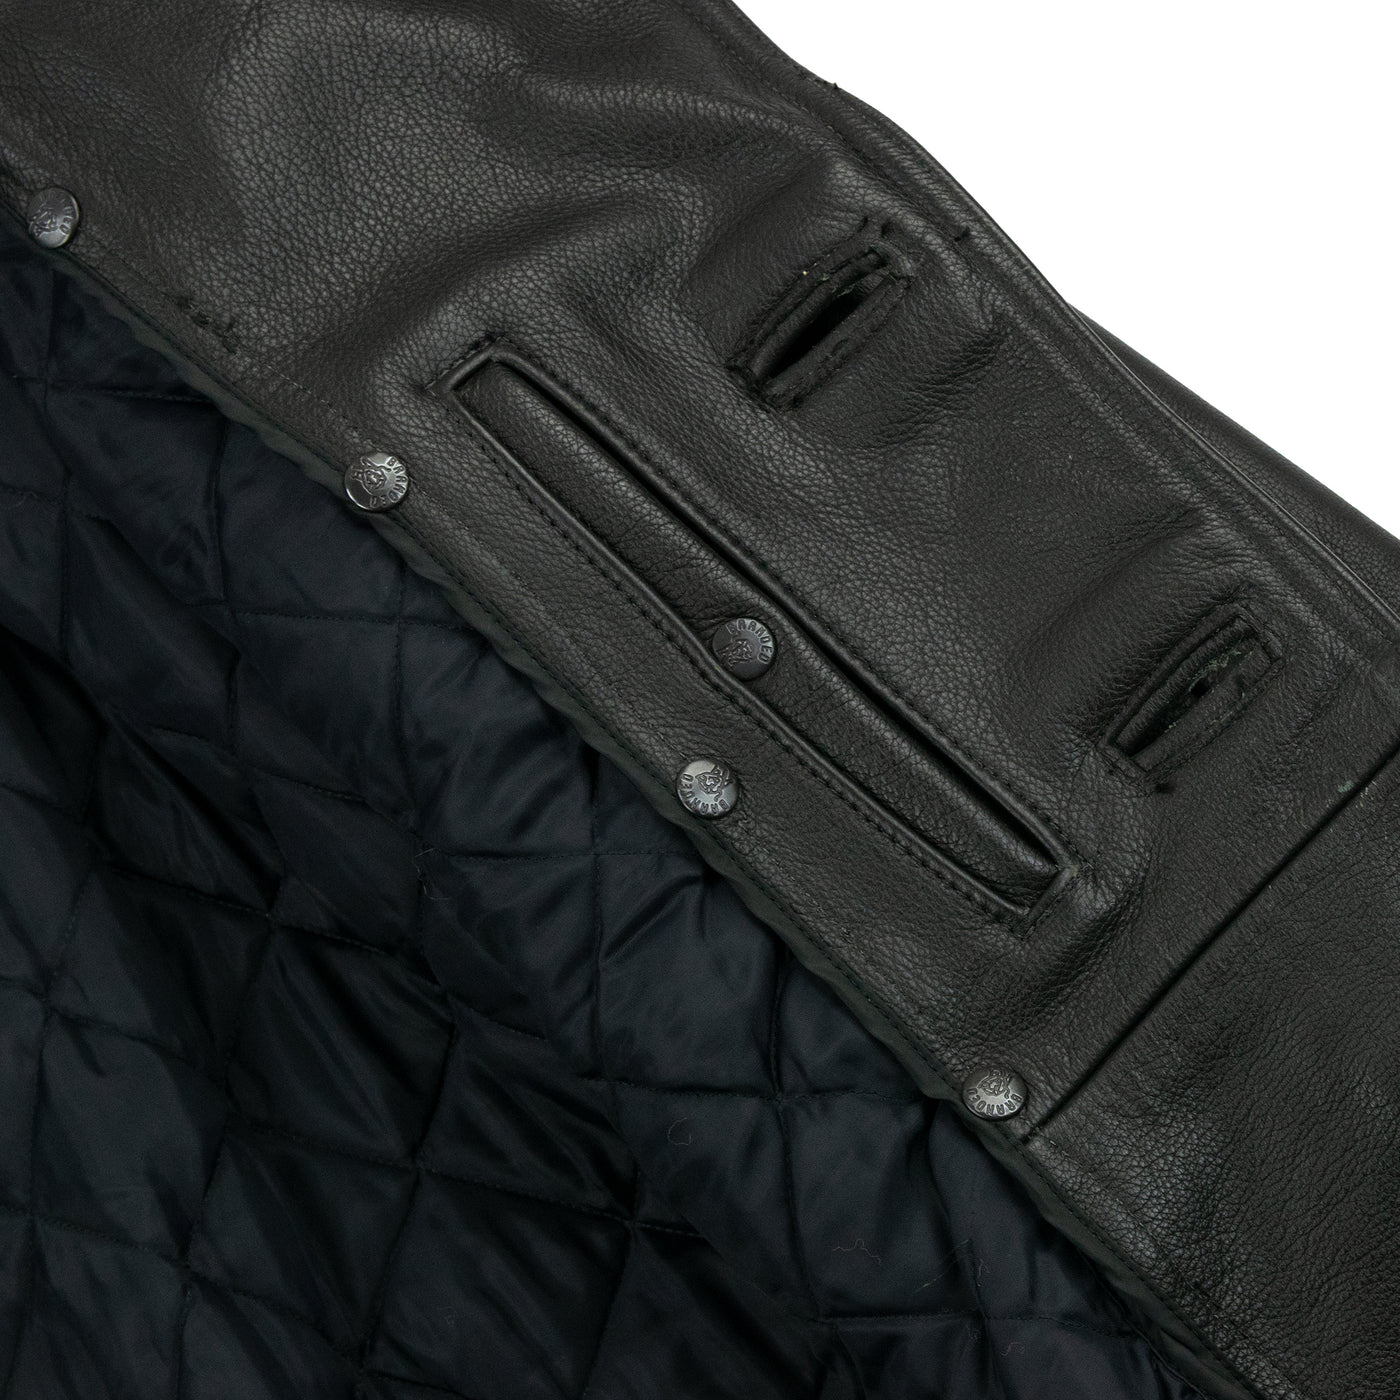 Circa 2000's Vintage New York Police Department Branded Garments Inc. Leather Jacket Inside Pocket